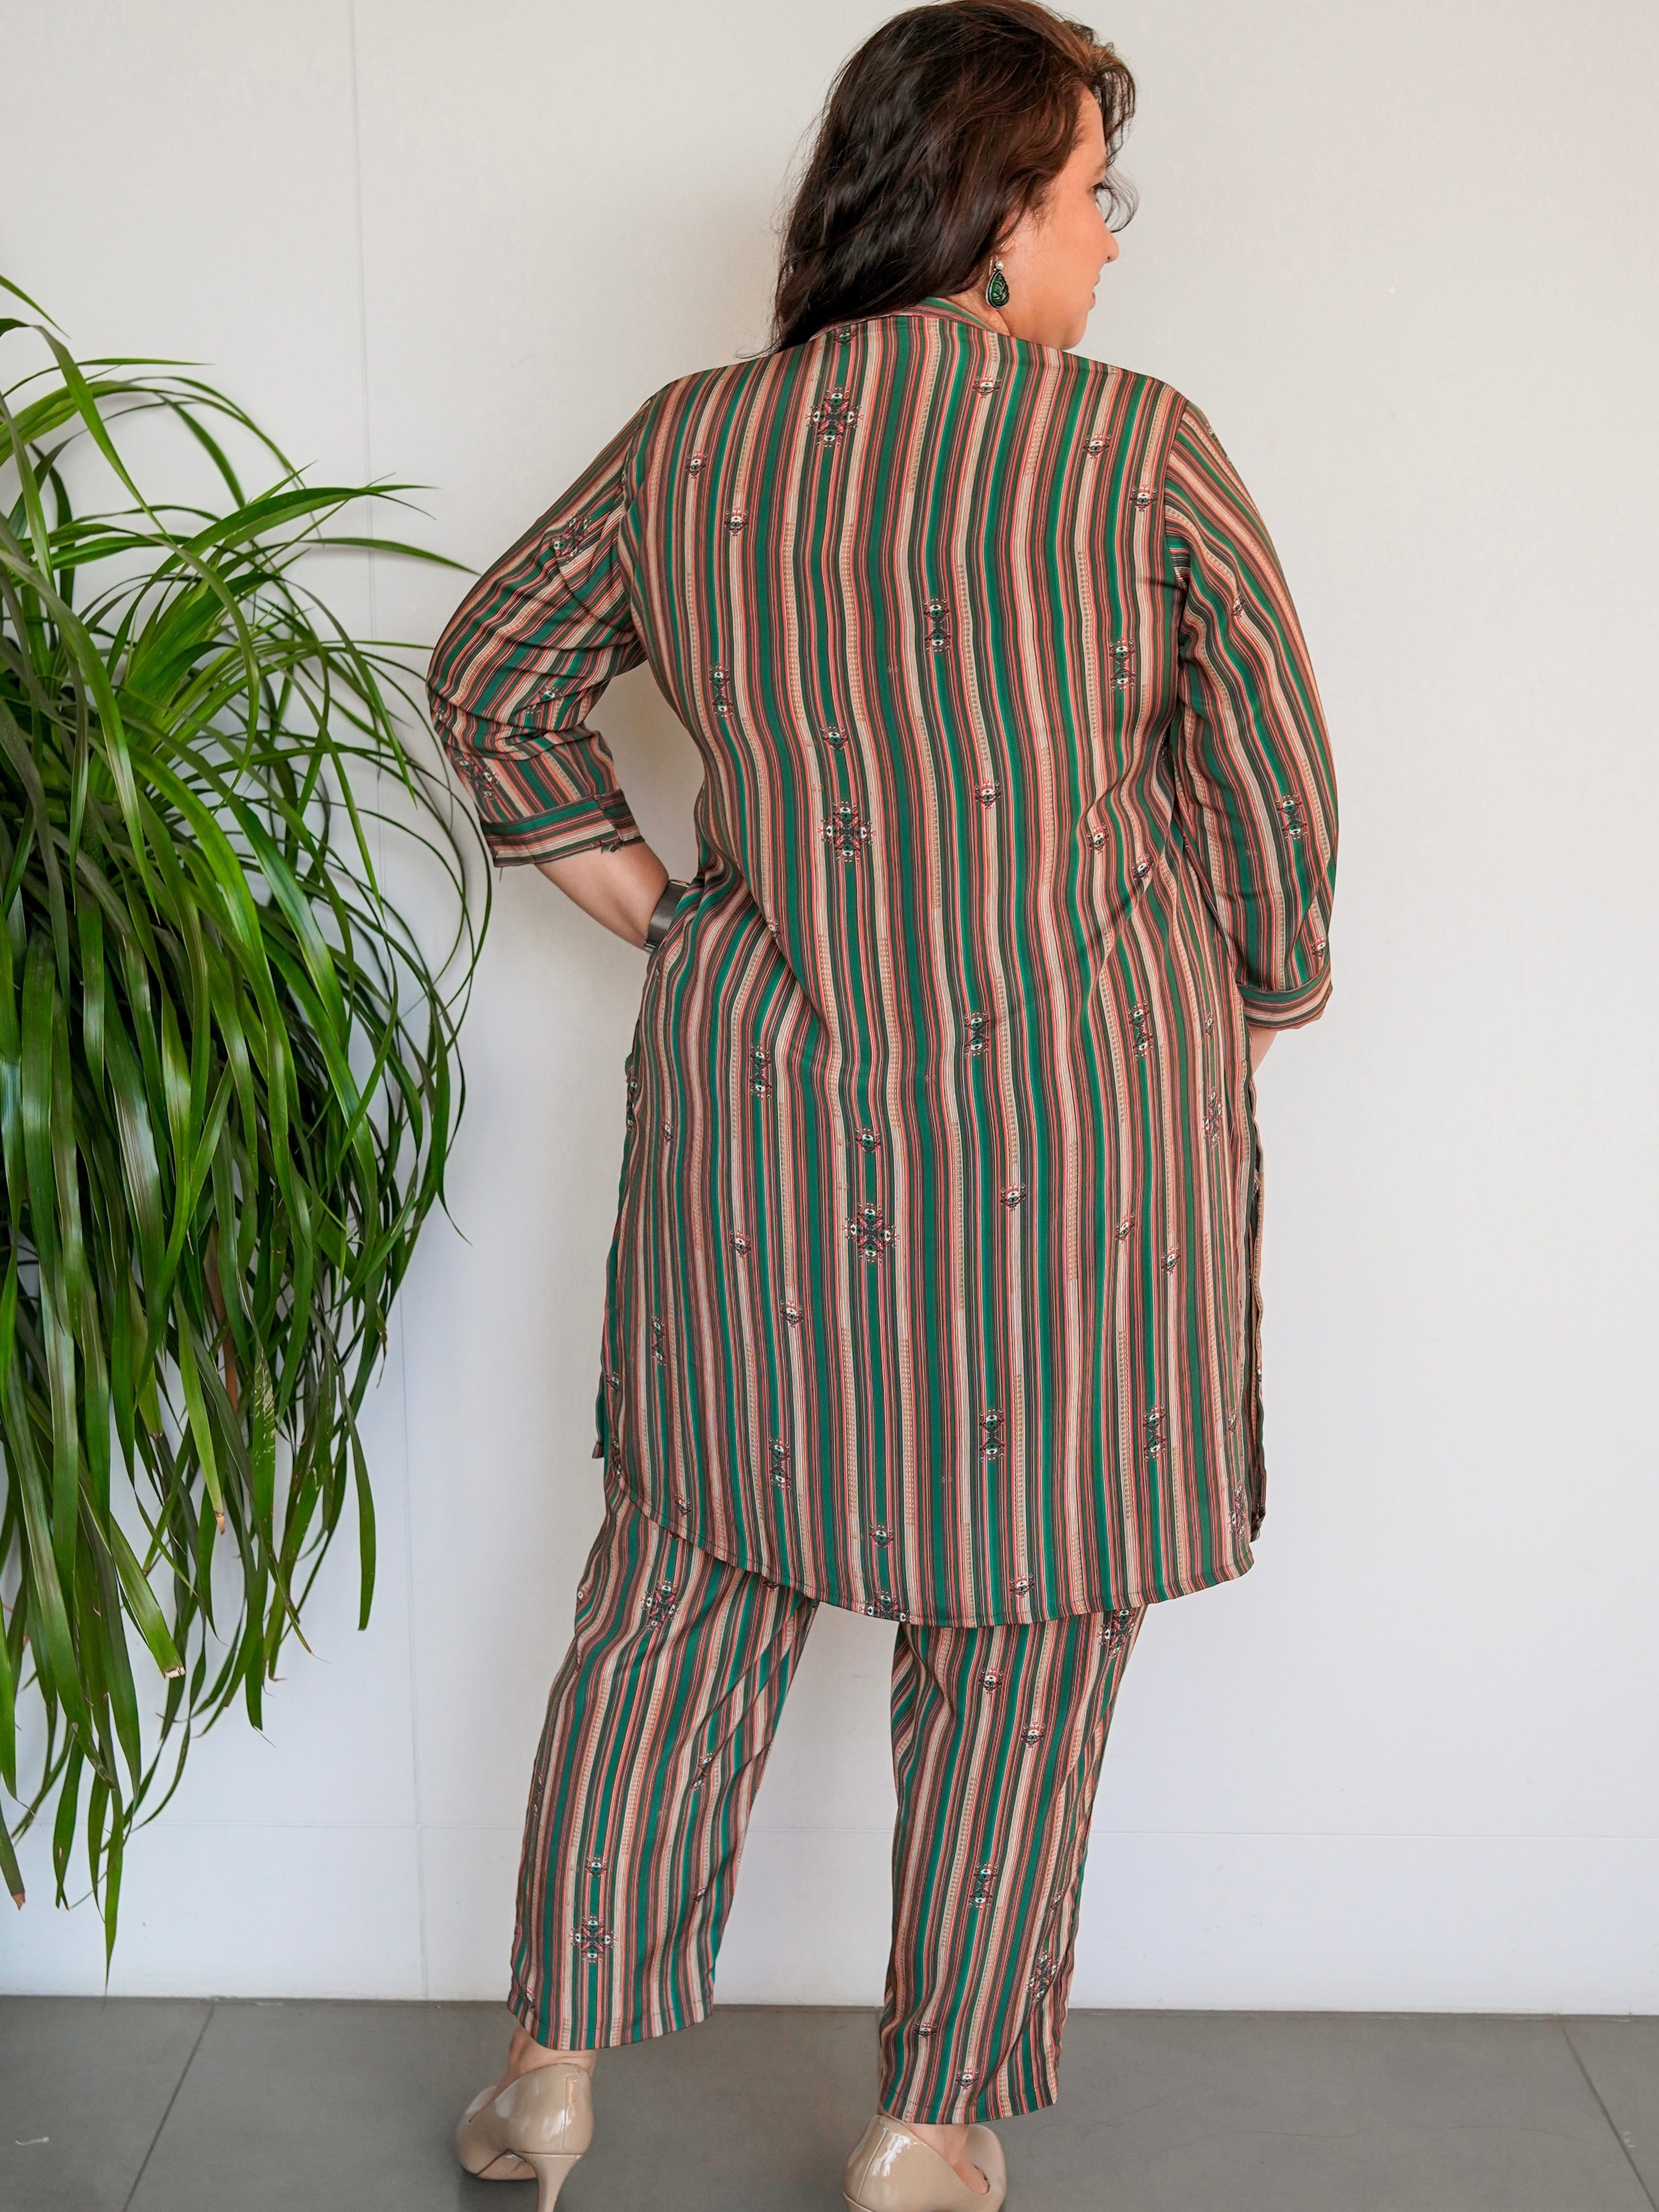 Olive Liner Stripes coord Set - Jeeaayanu Fashion